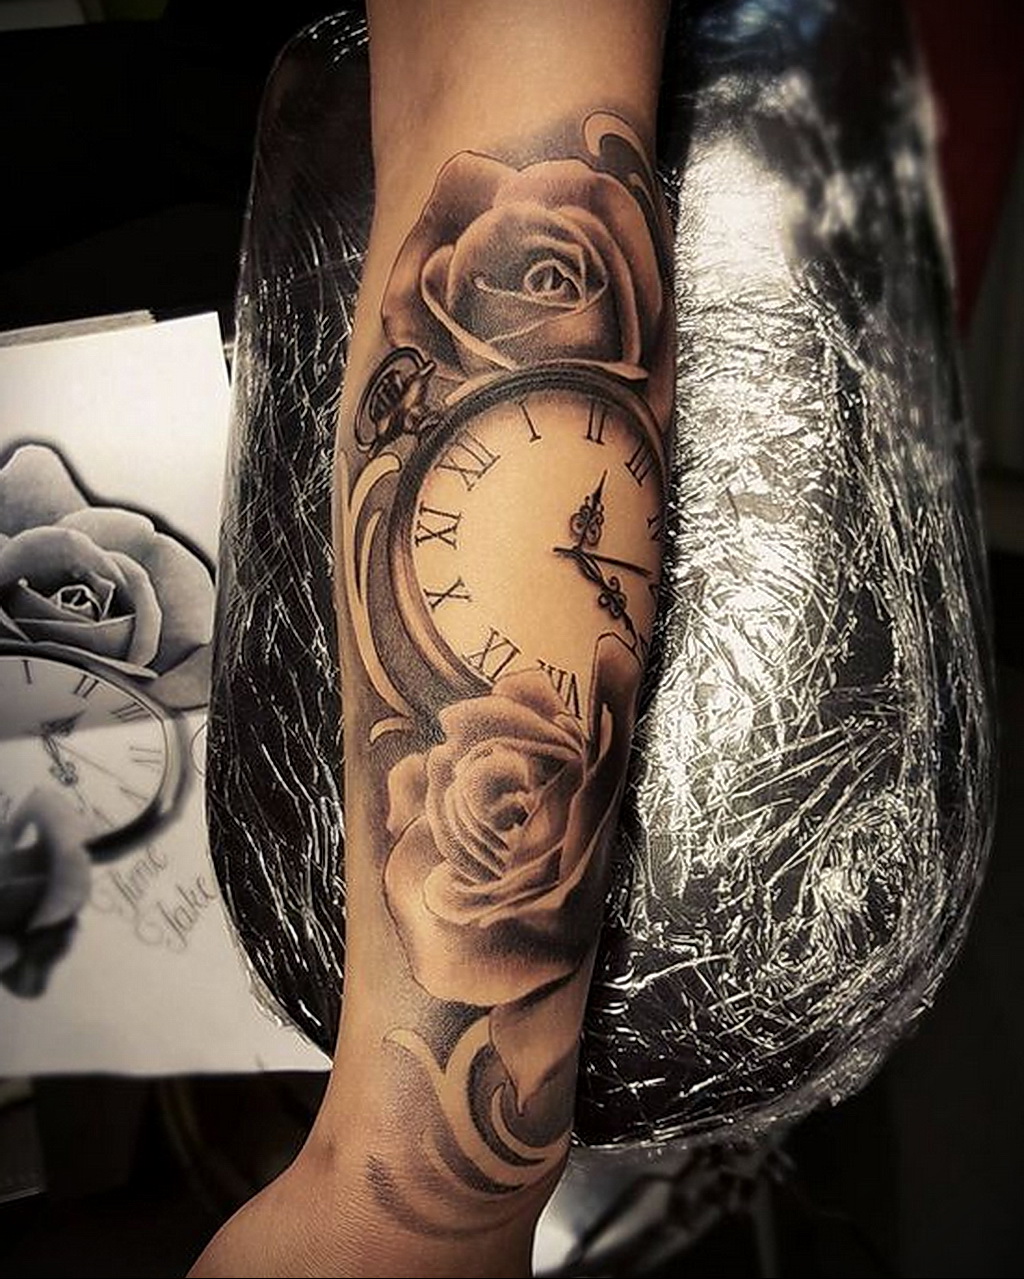 Фото тату часы для мужчины 19.01.2021 № 0025 -tattoo clock for men-tatufoto...